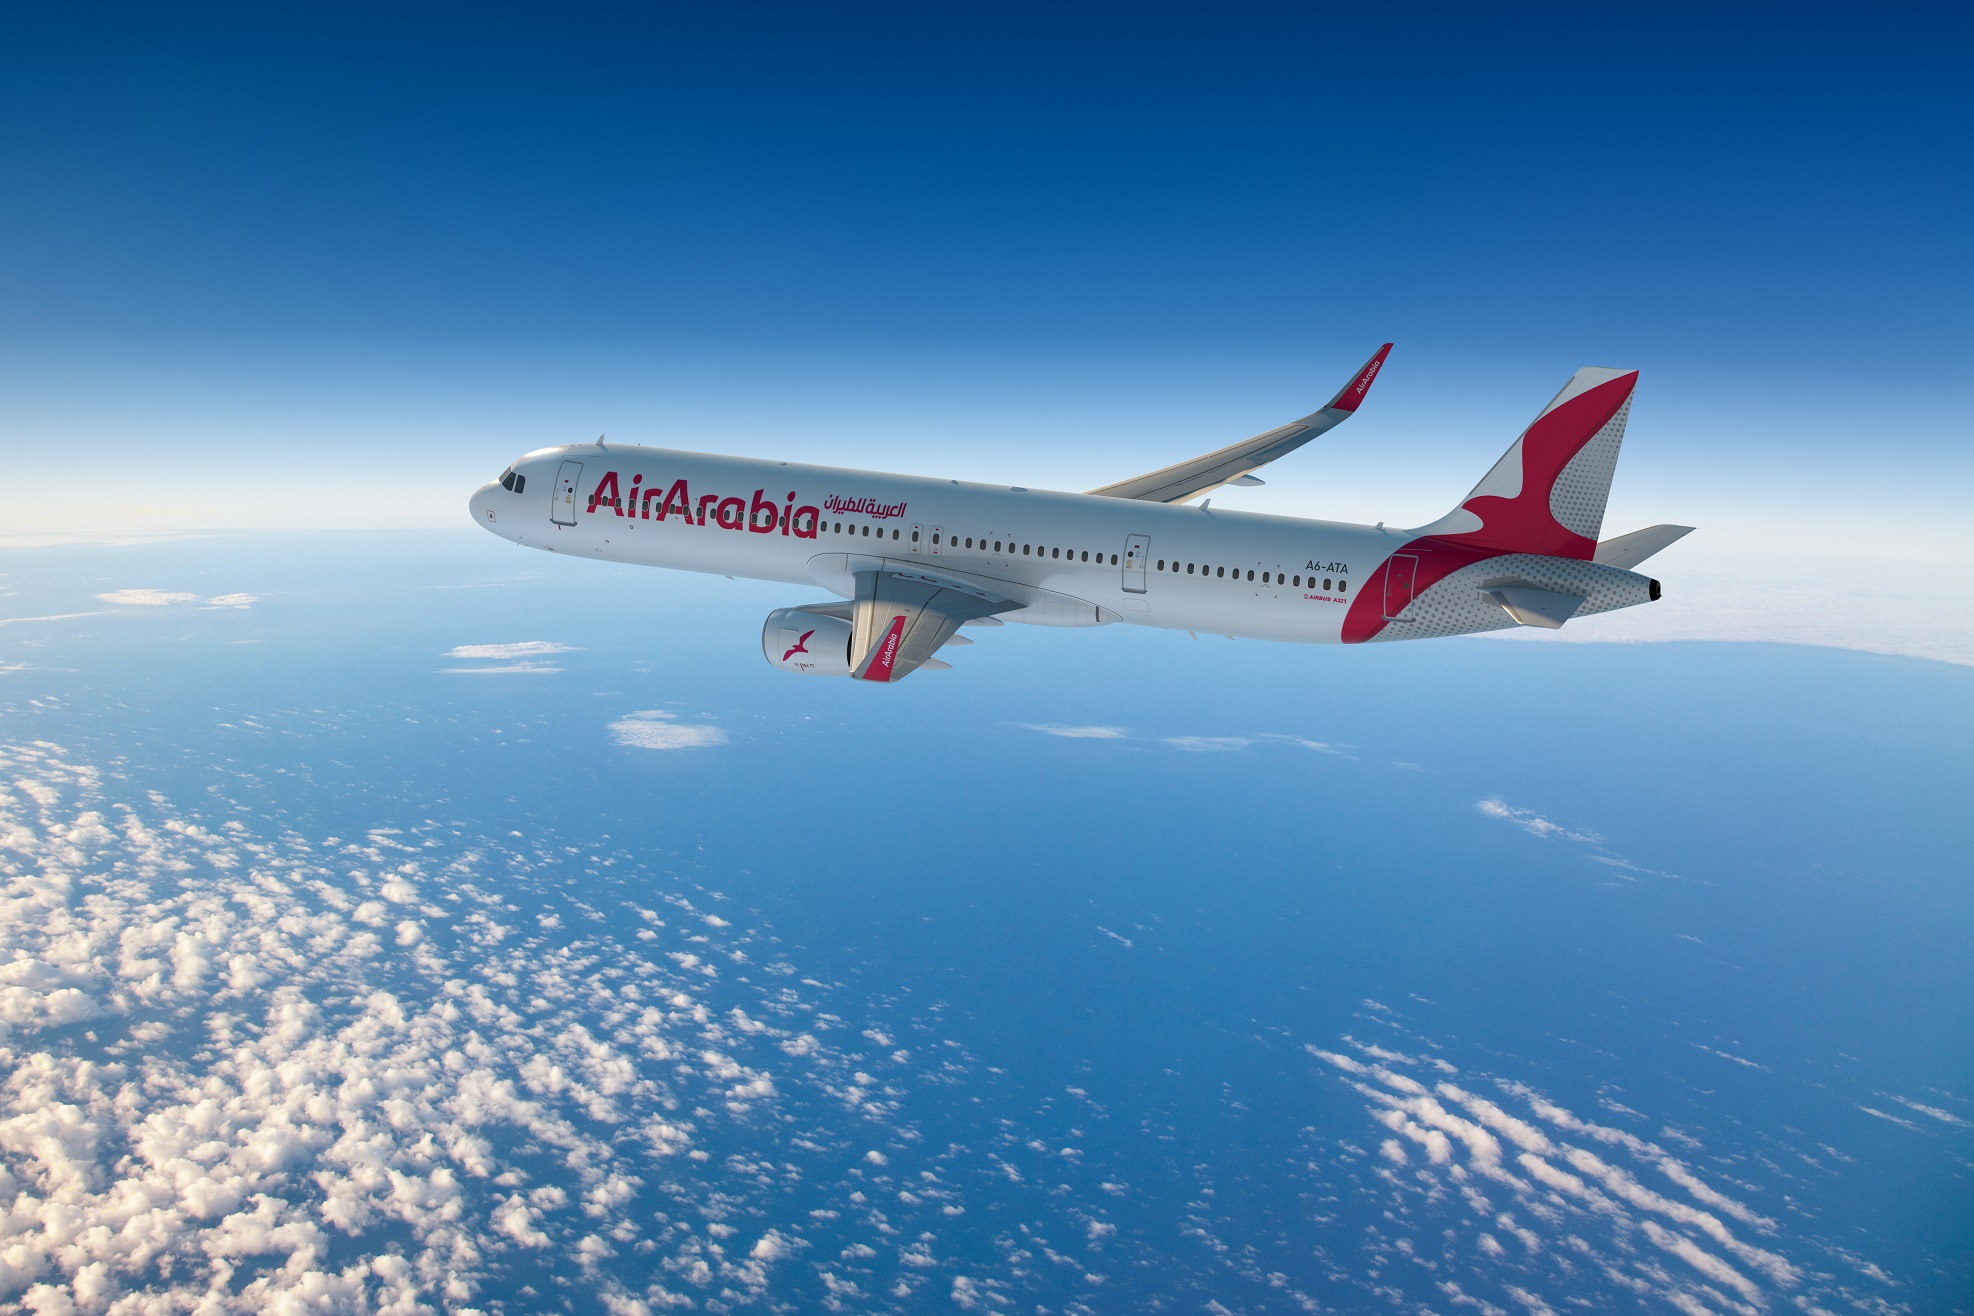 Air Arabia Abu Dhabi Launches “City Check-In” Services